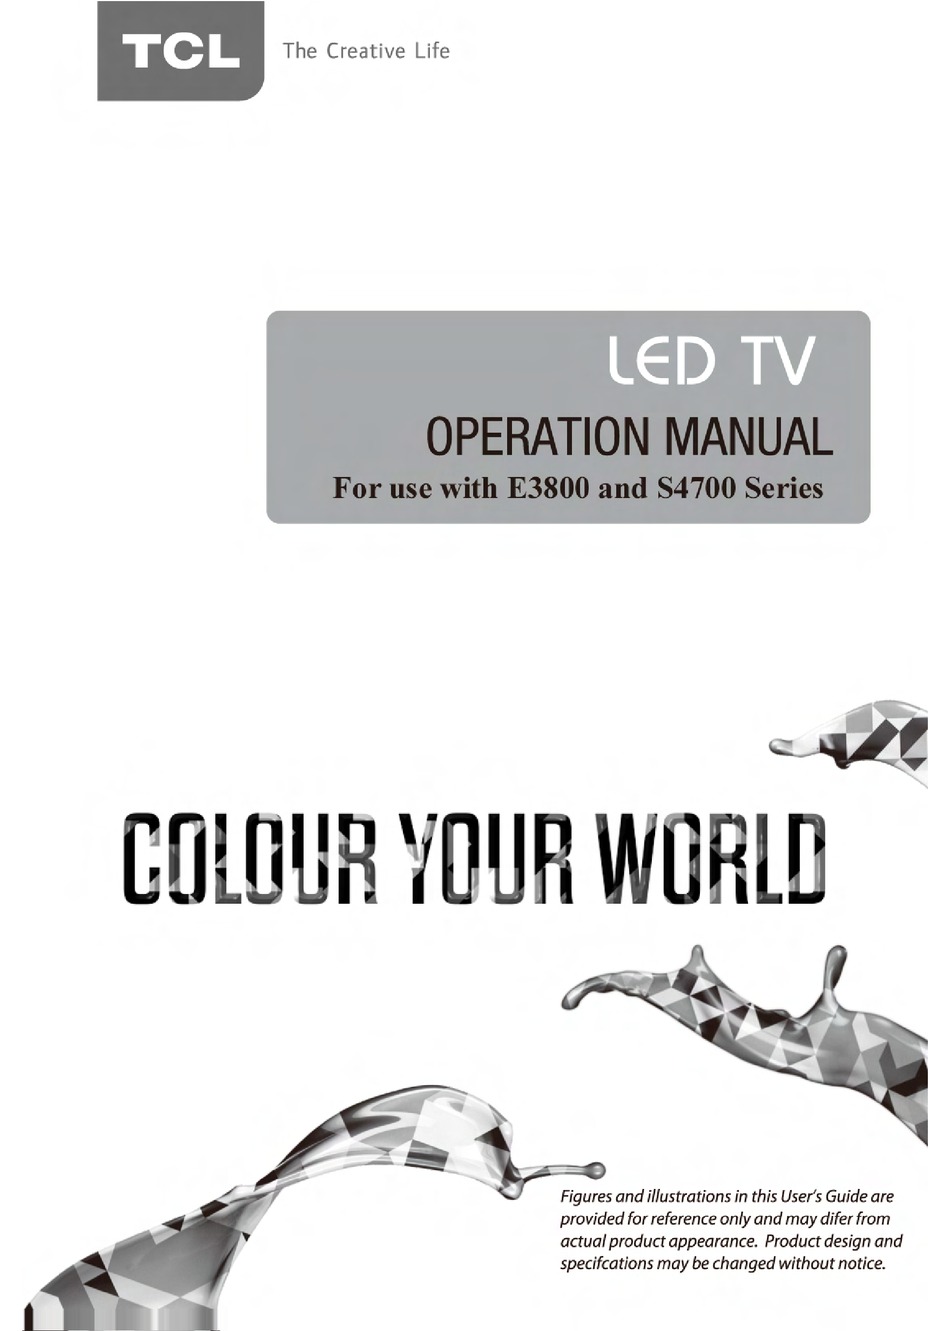 TCL E3800 SERIES OPERATION MANUAL Pdf Download | ManualsLib